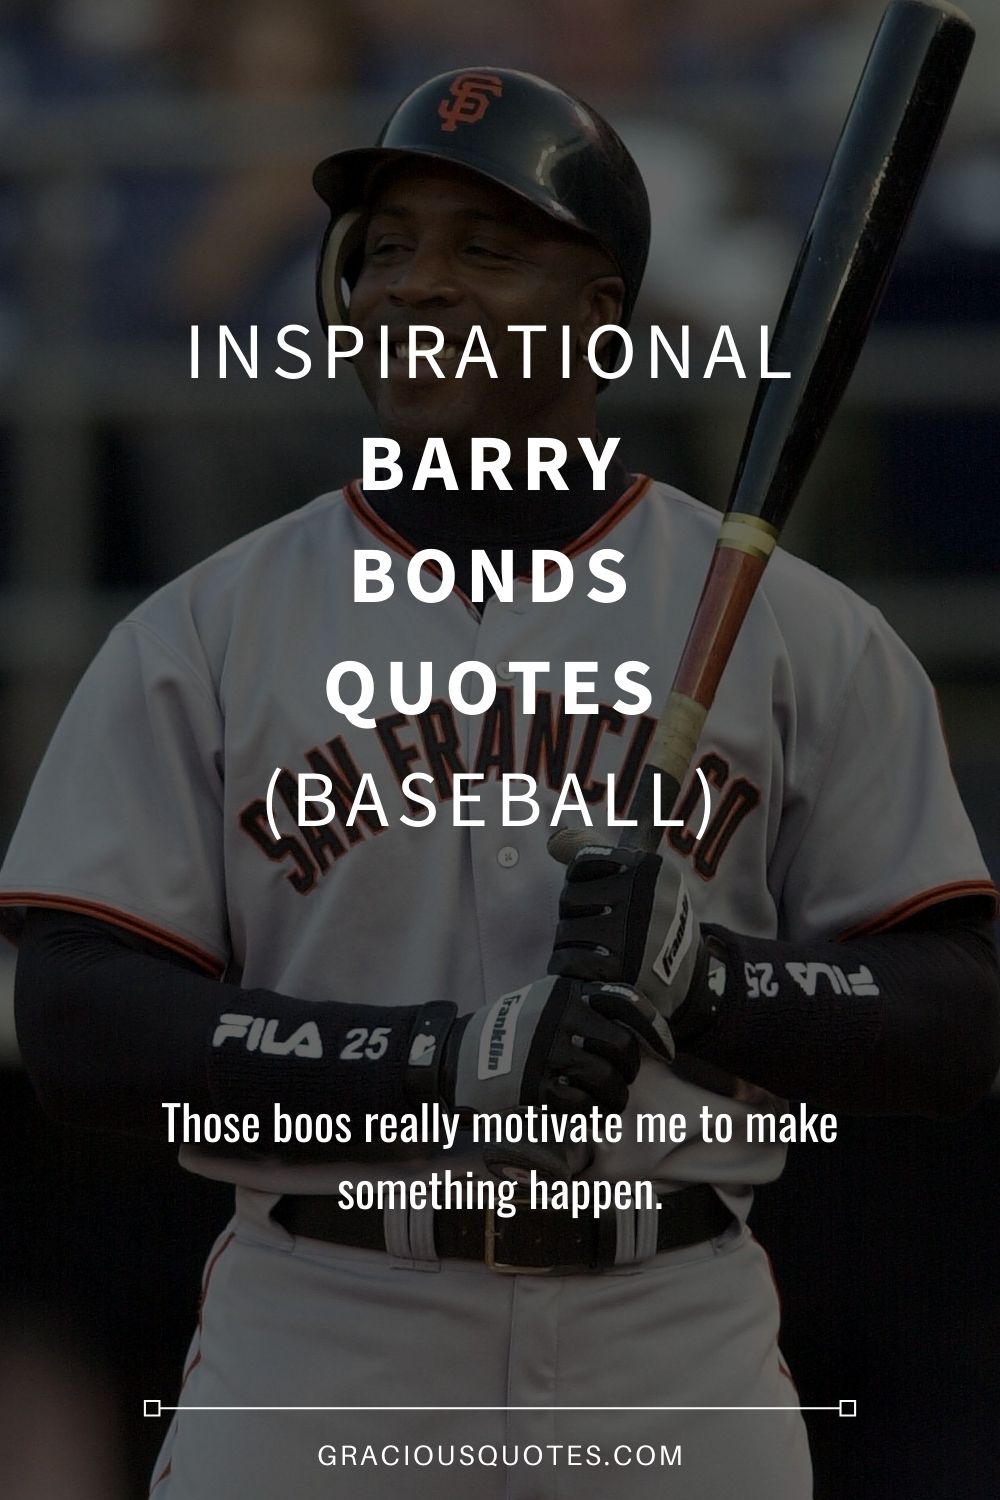 Inspirational Barry Bonds Quotes (BASEBALL) - Gracious Quotes